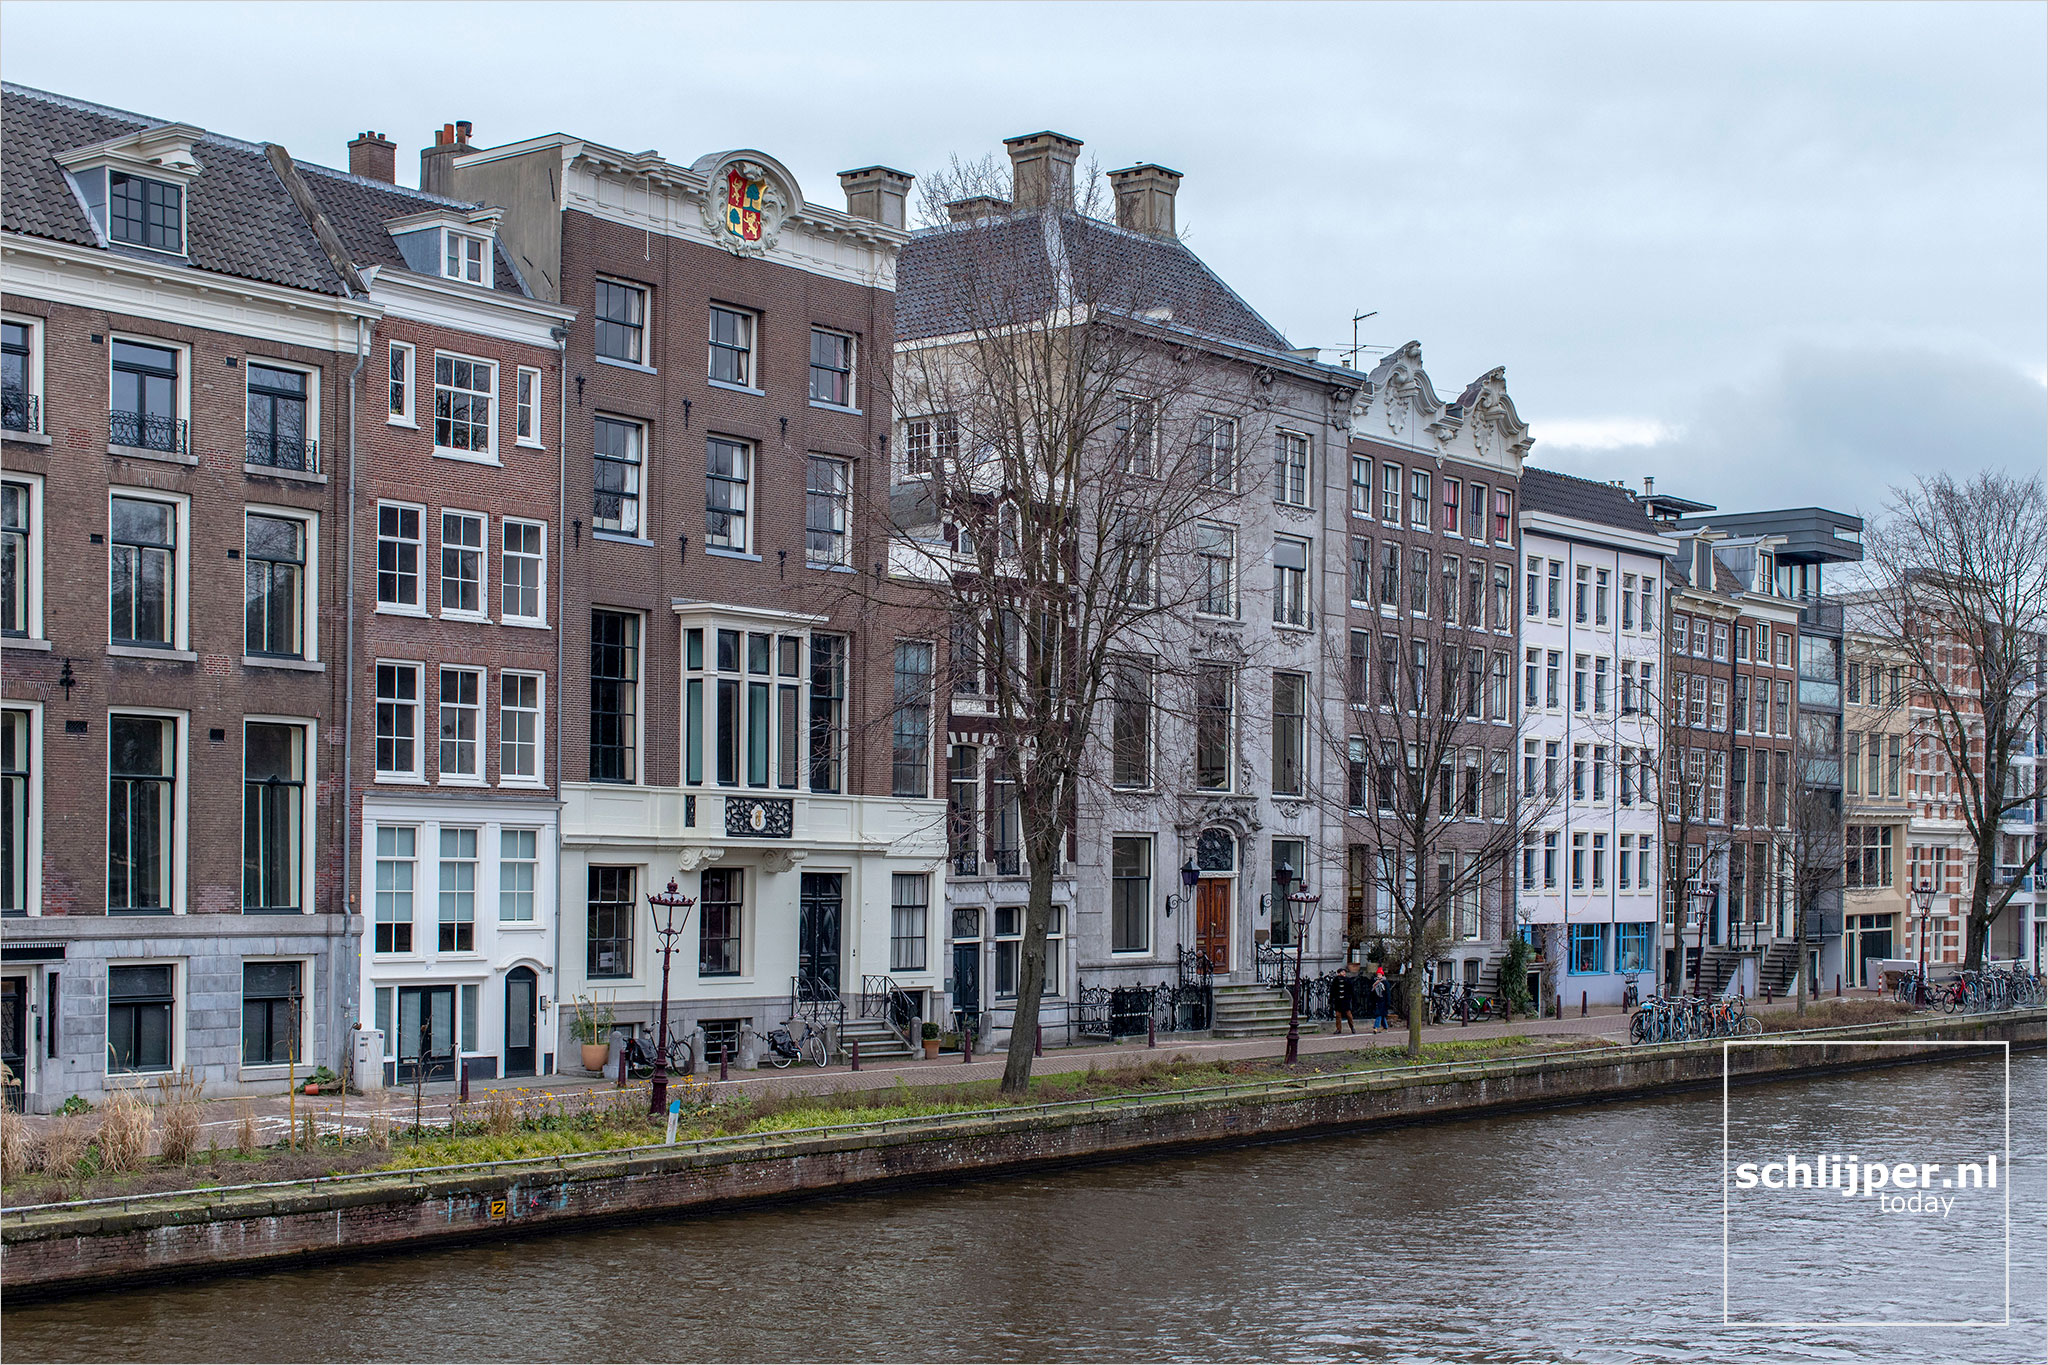 The Netherlands, Amsterdam, 30 januari 2021